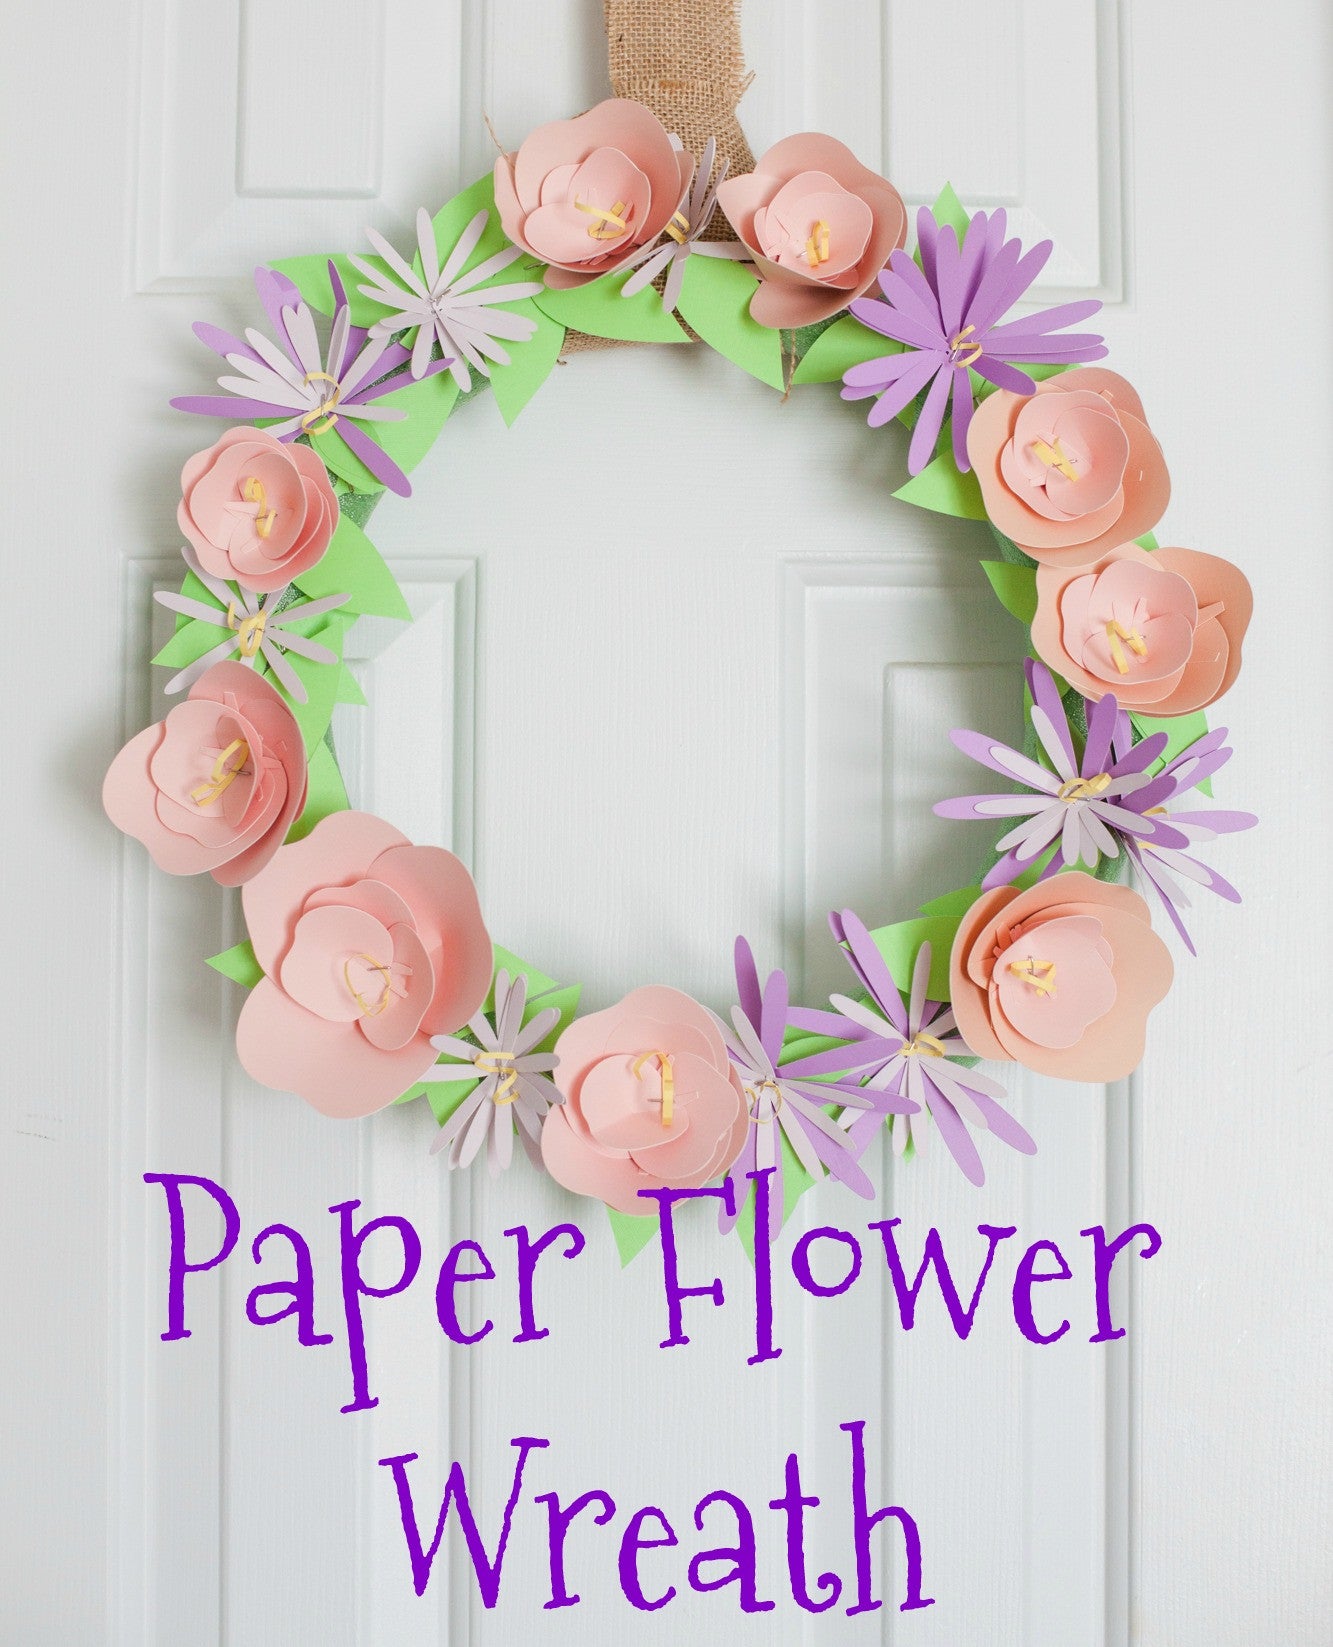 Paper Flower Wreath with Cricut